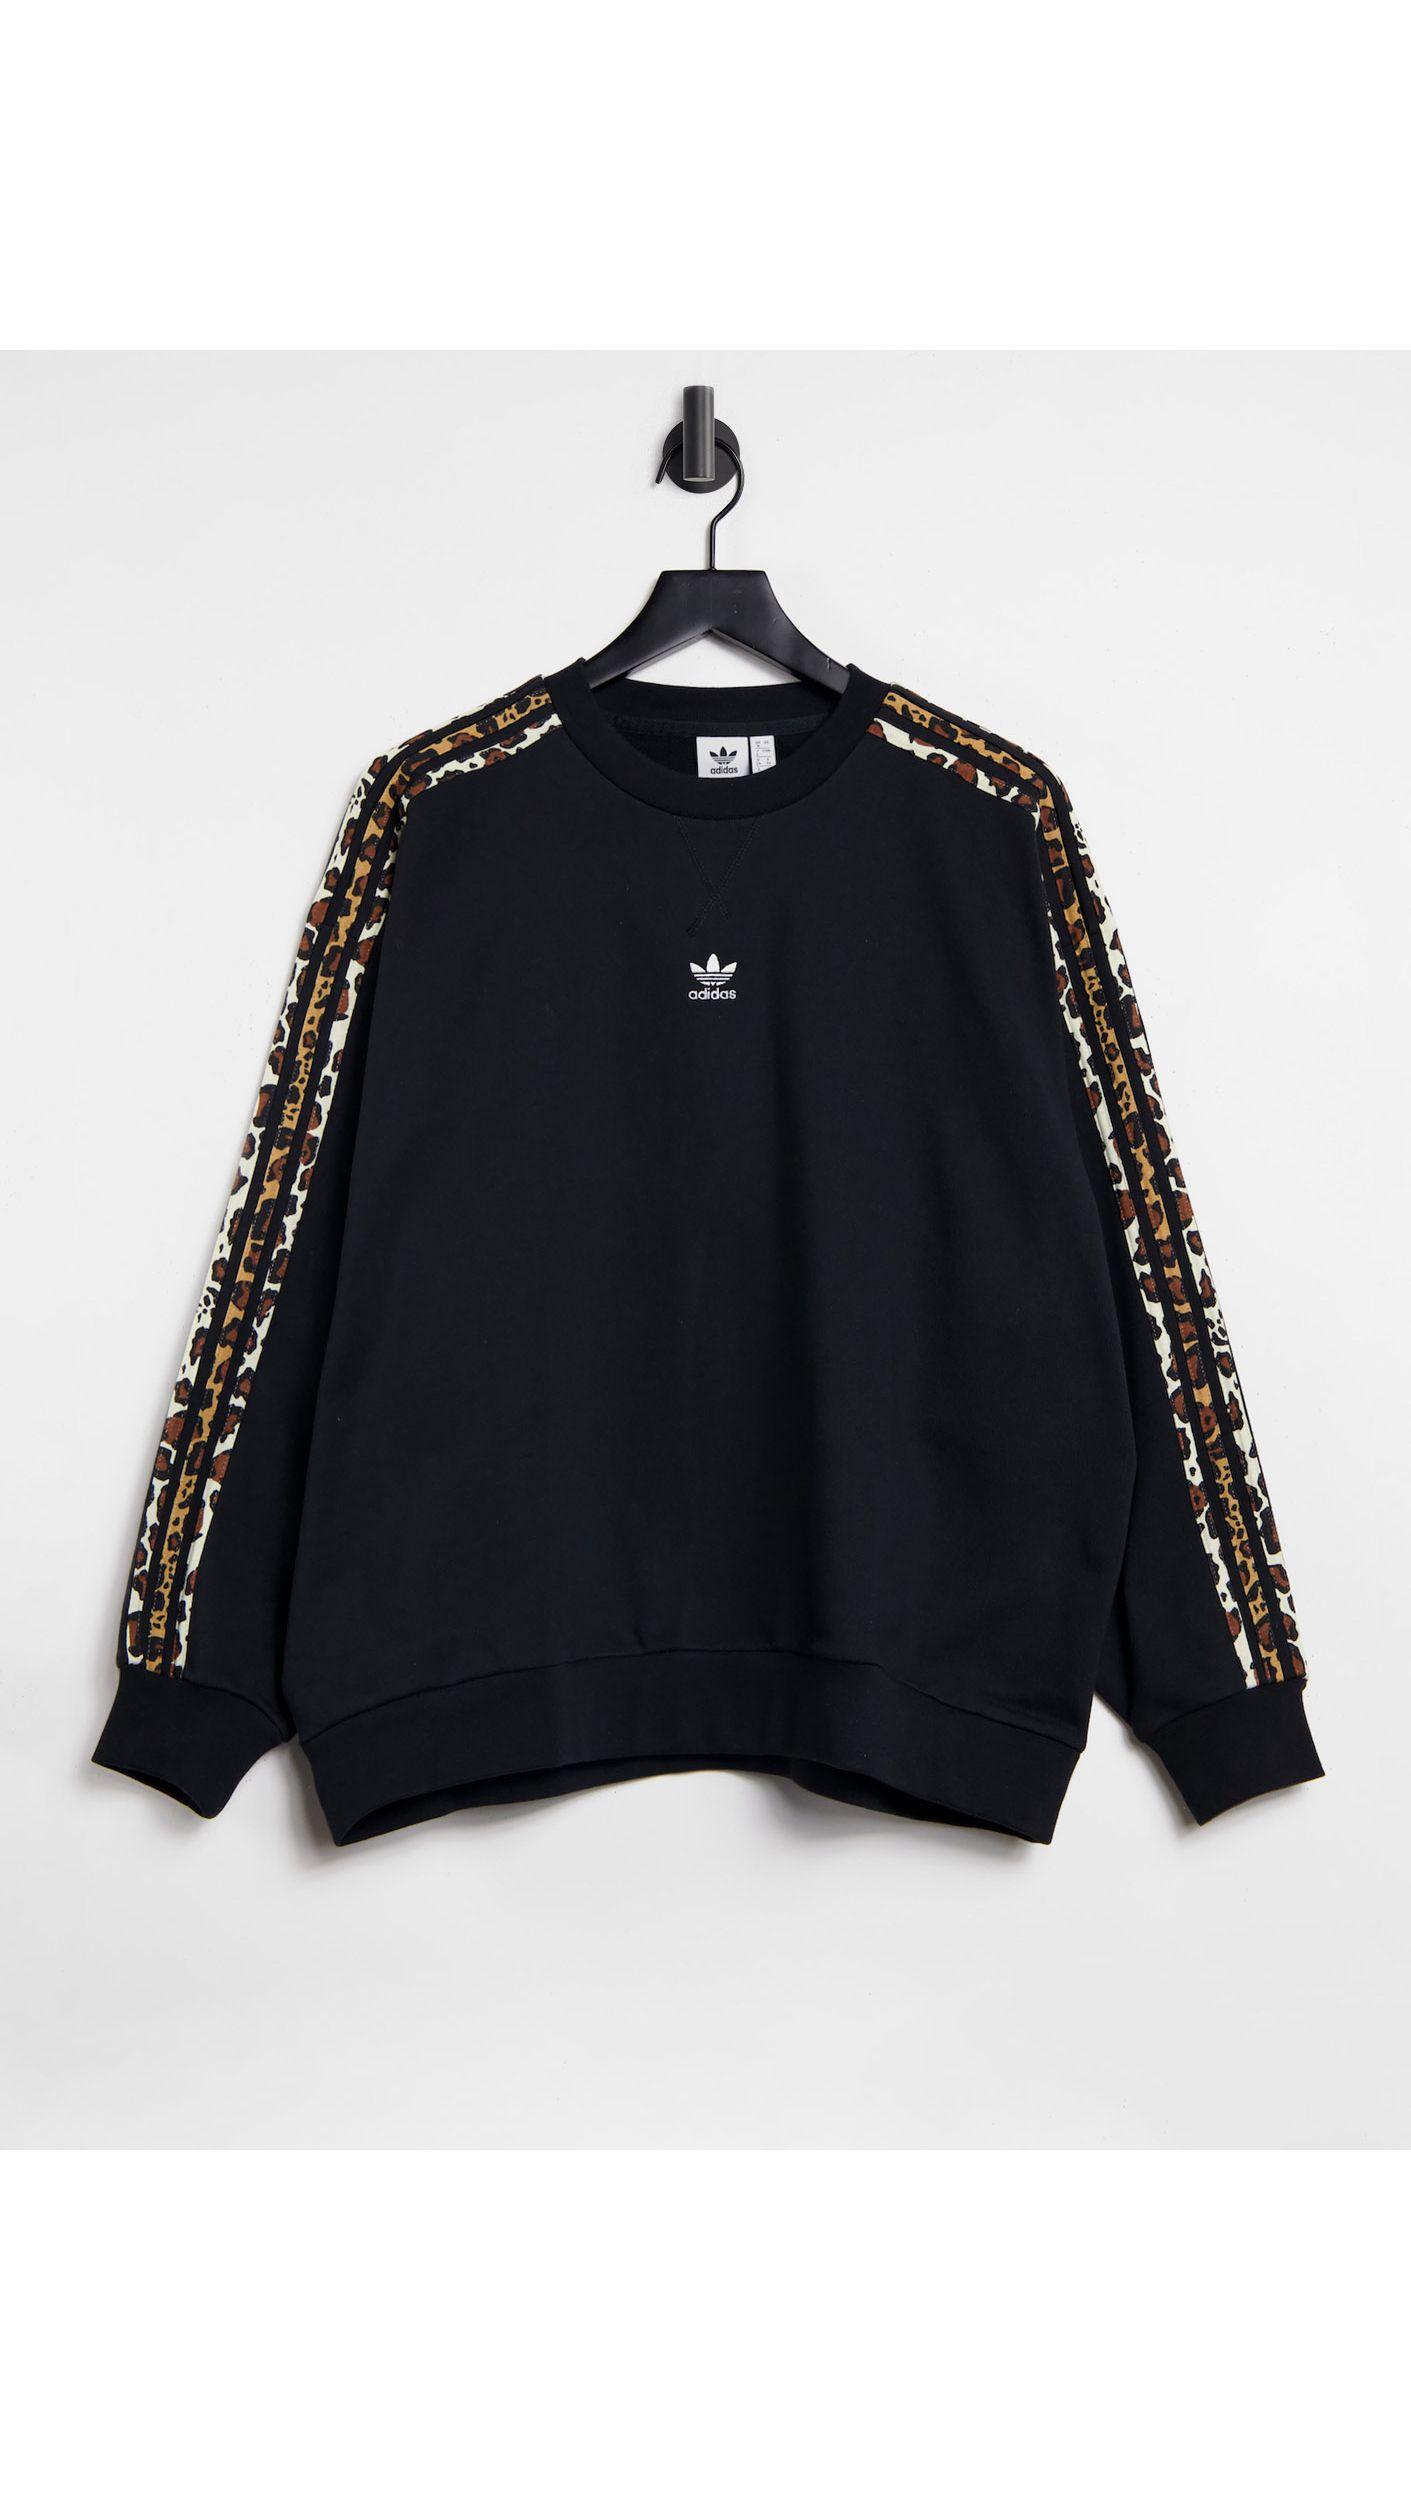 adidas Originals 'leopard Luxe' Oversized Sweatshirt in Black | Lyst  Australia